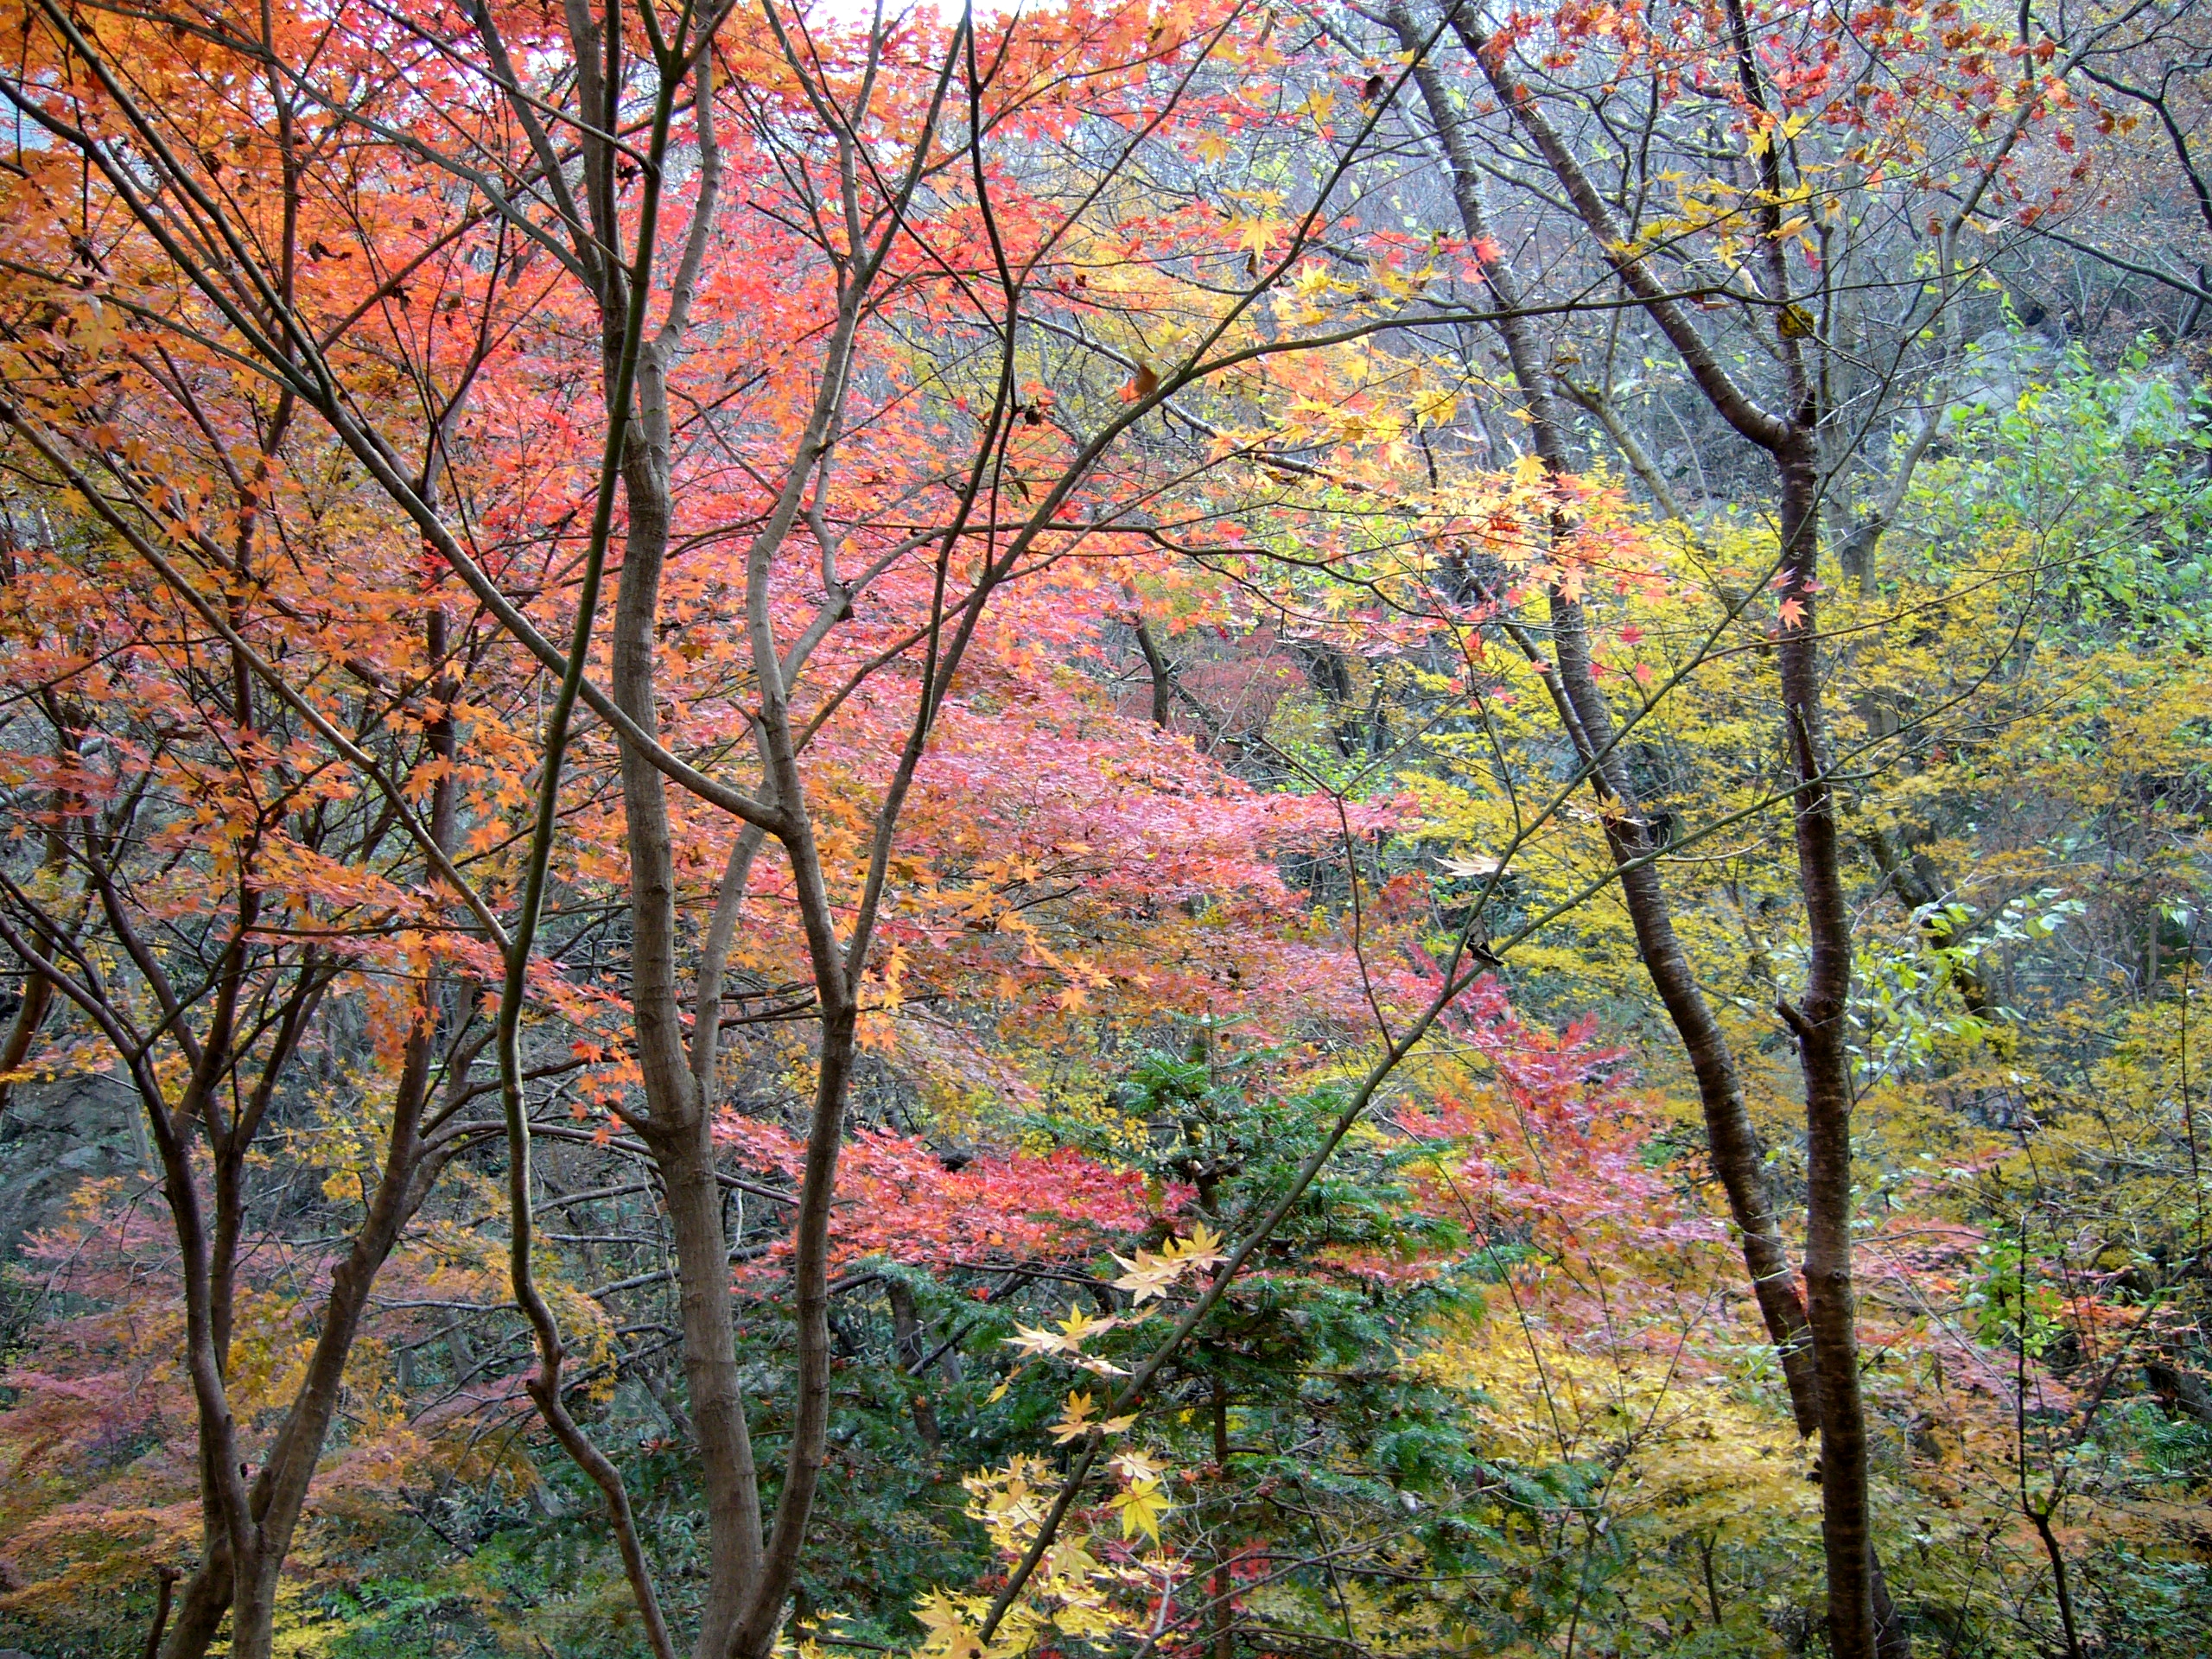 Autumn in South Korea: A Season of Vibrant Beauty